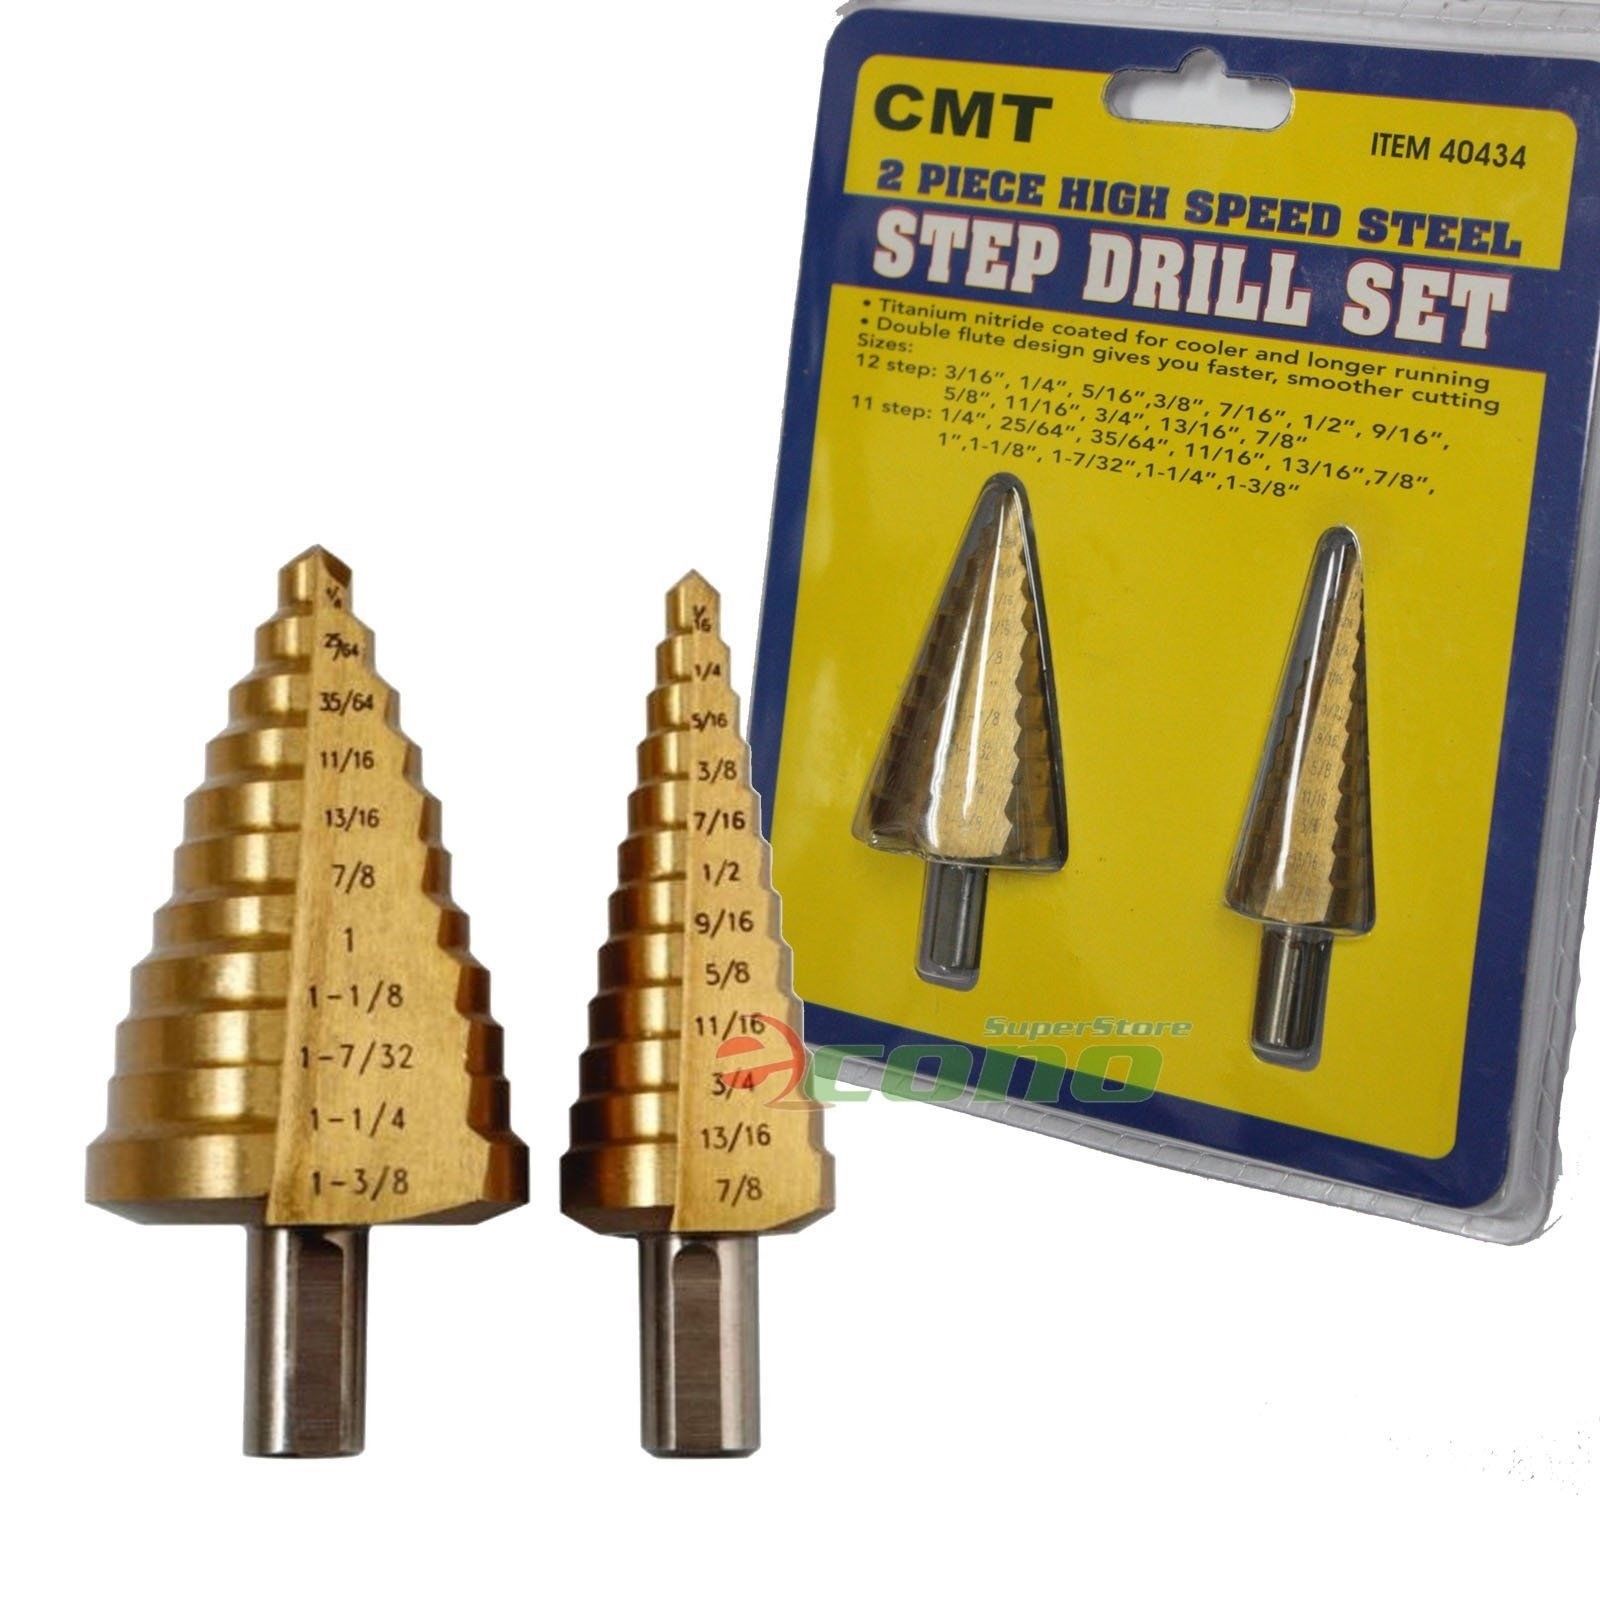 Titanium Nitride Coated Steel Step Drill Bit Set